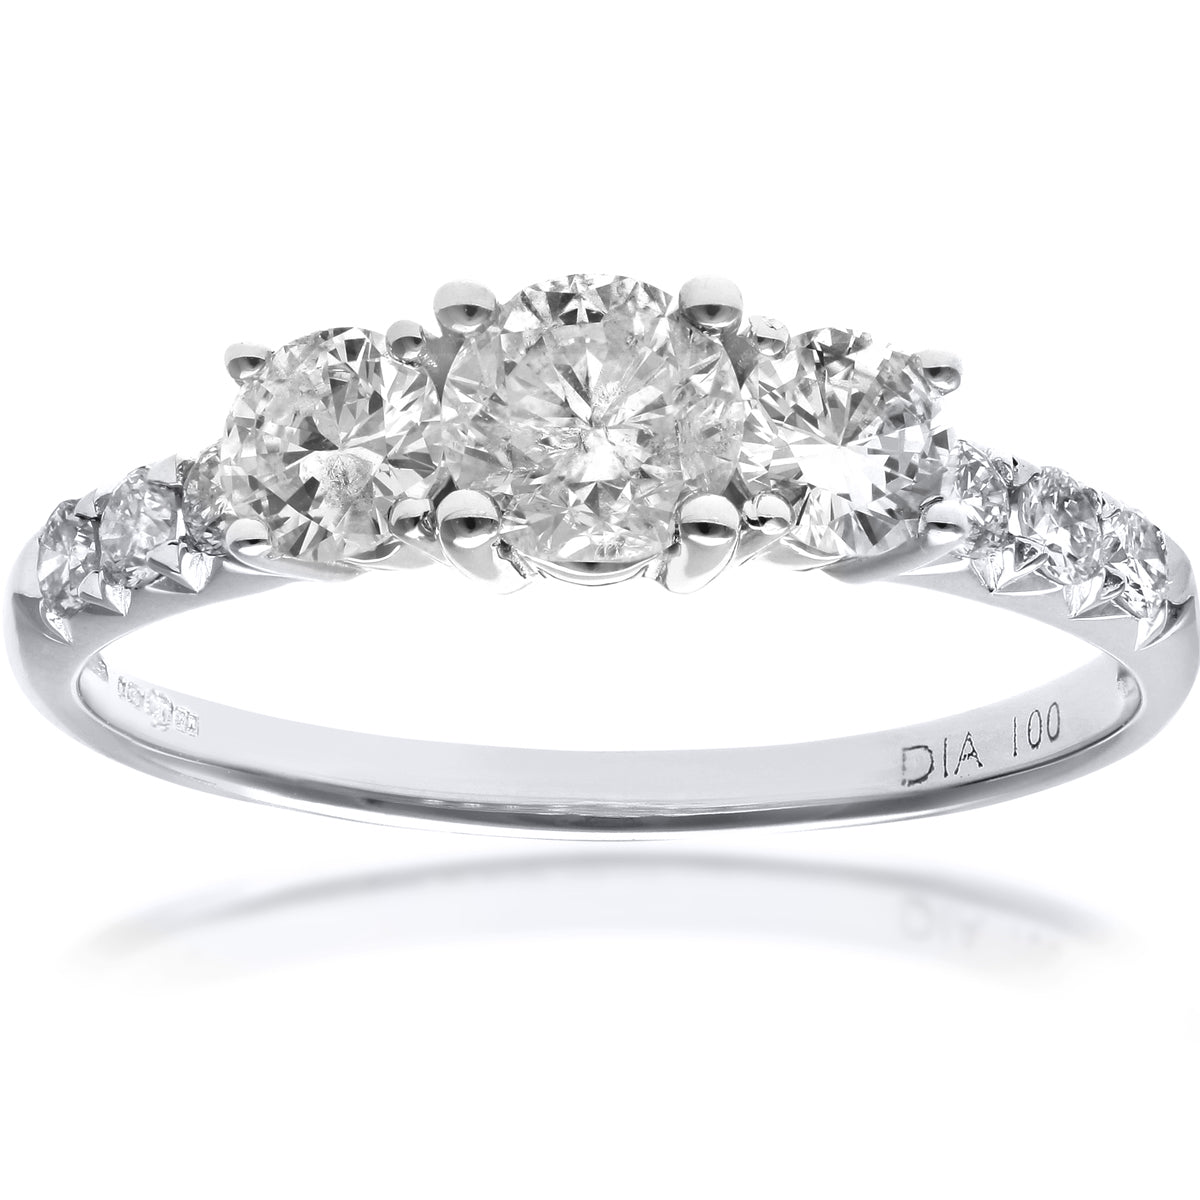 18ct White Gold  Round Diamond Engagement Engagement Ring - PR1AXL096518KW